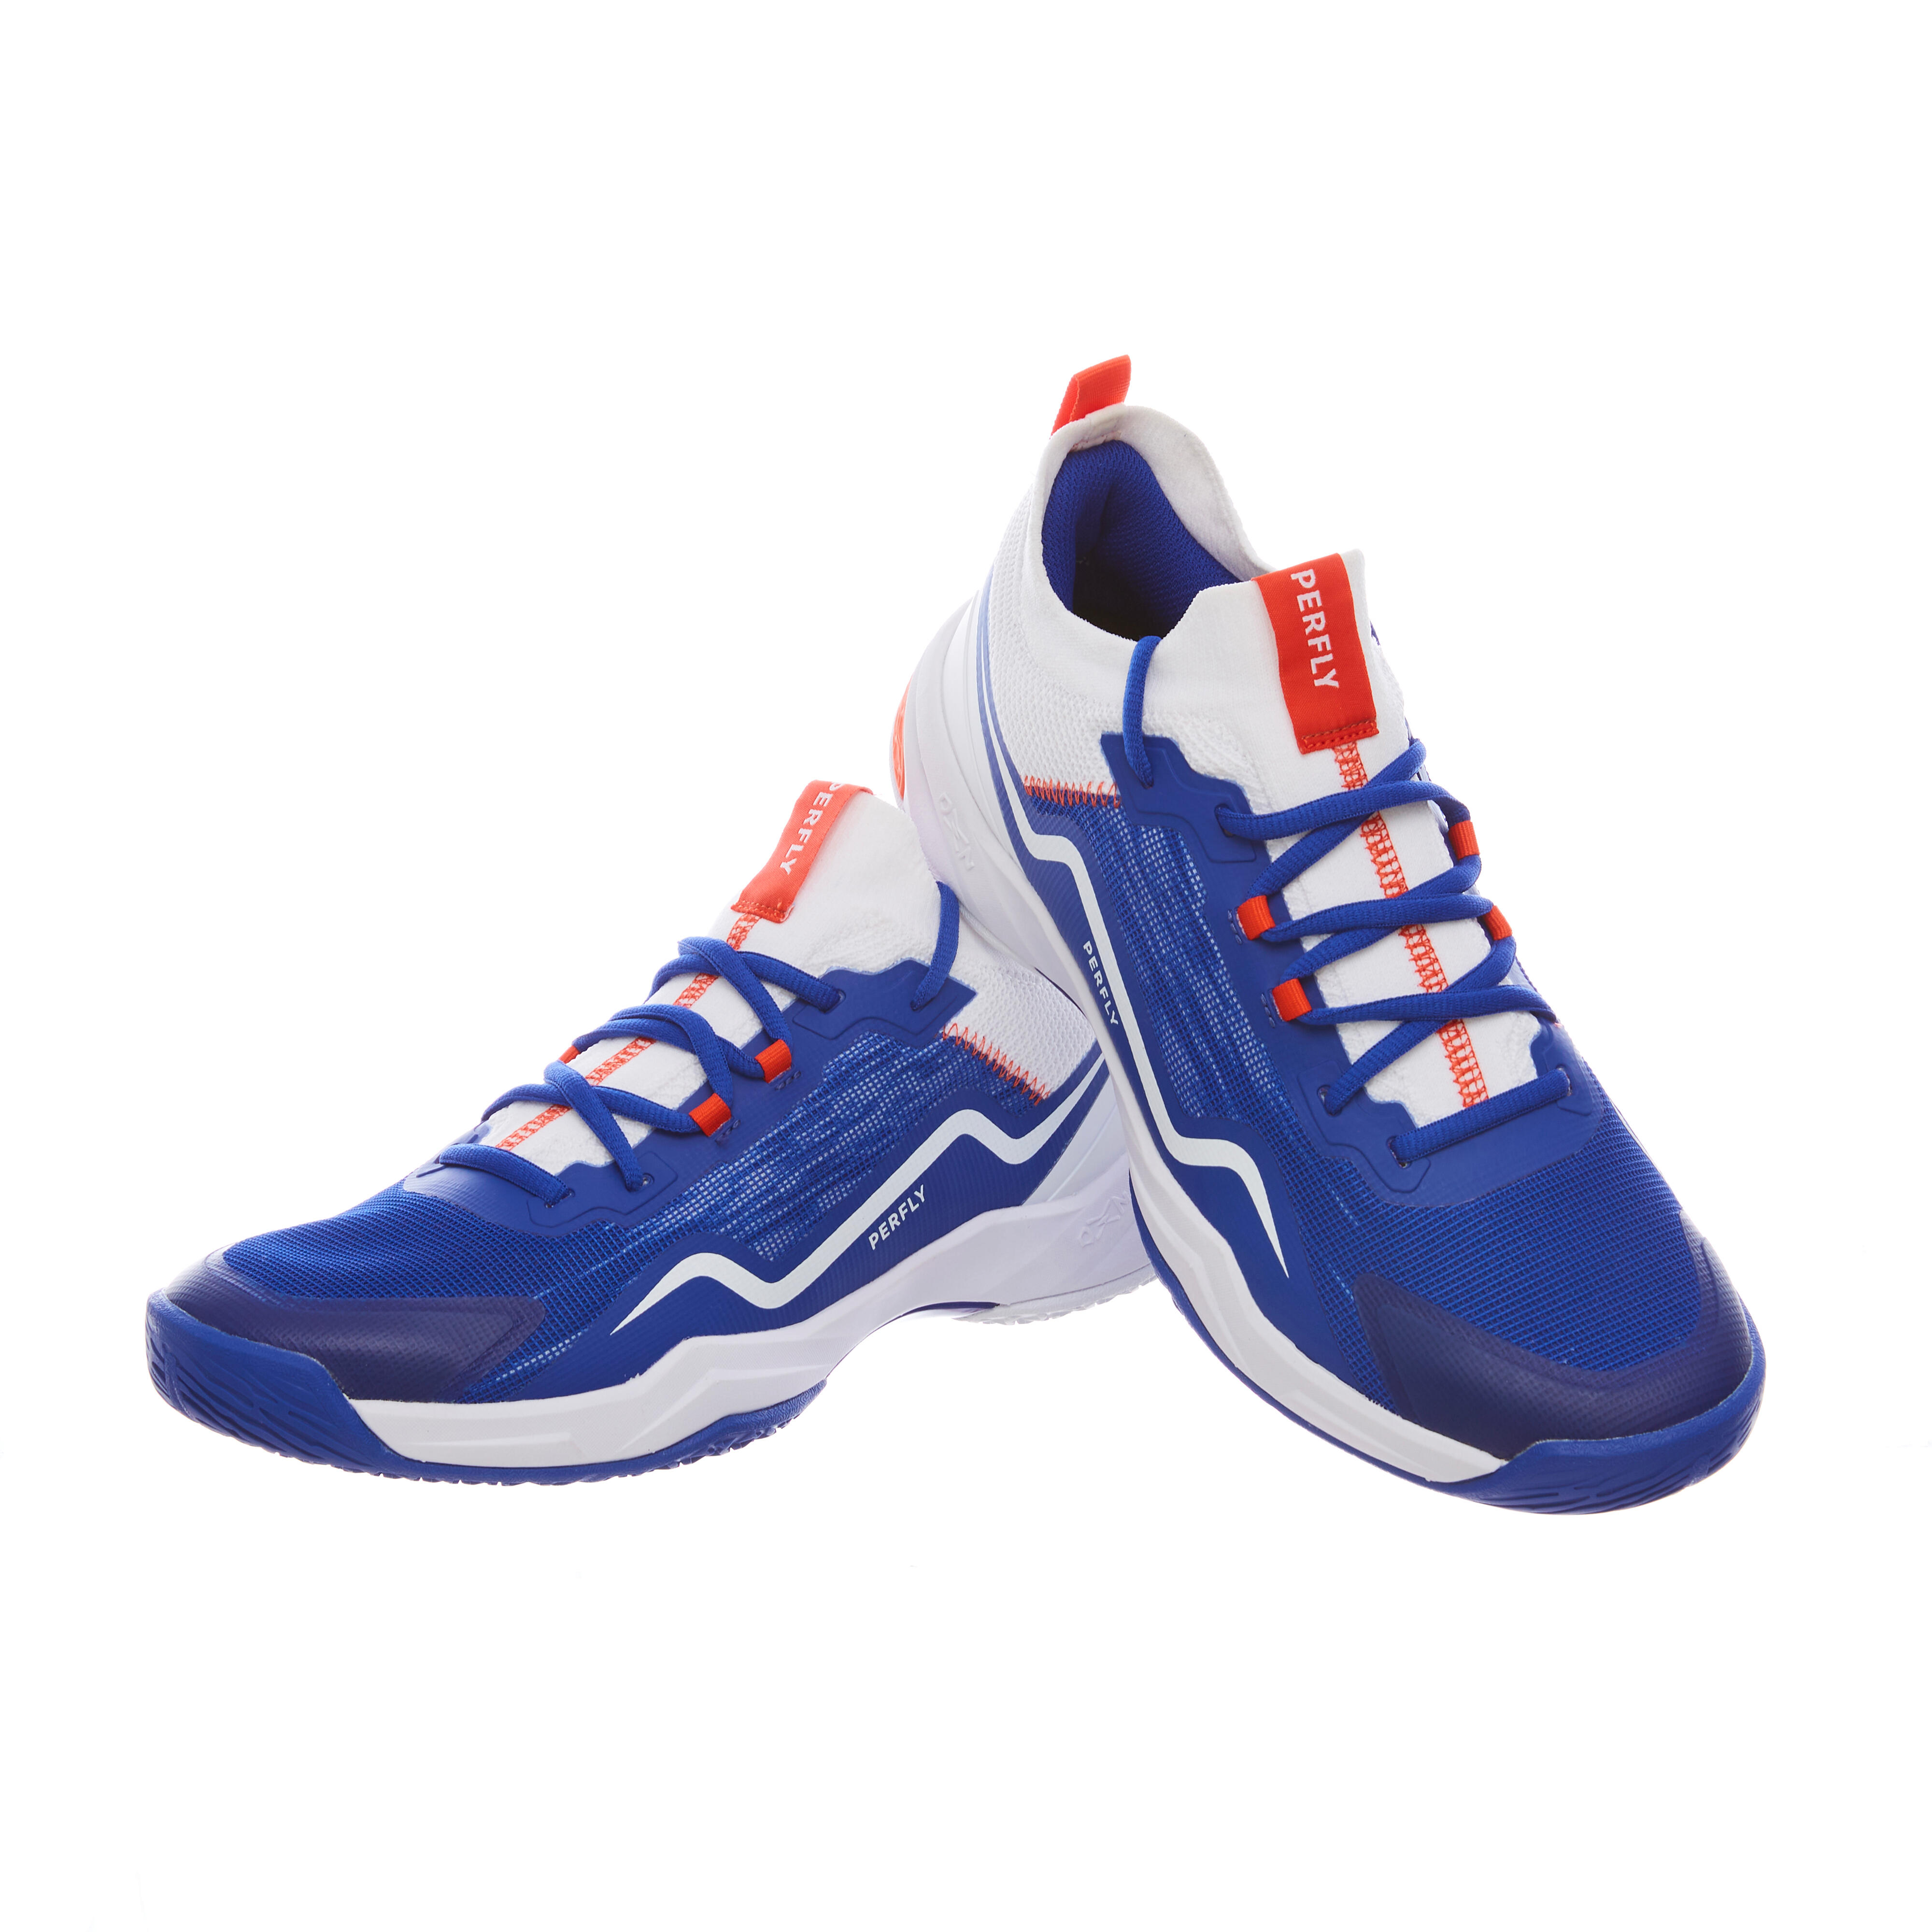 Chaussures de badminton Ultra Lite homme - BS 900 bleu - PERFLY